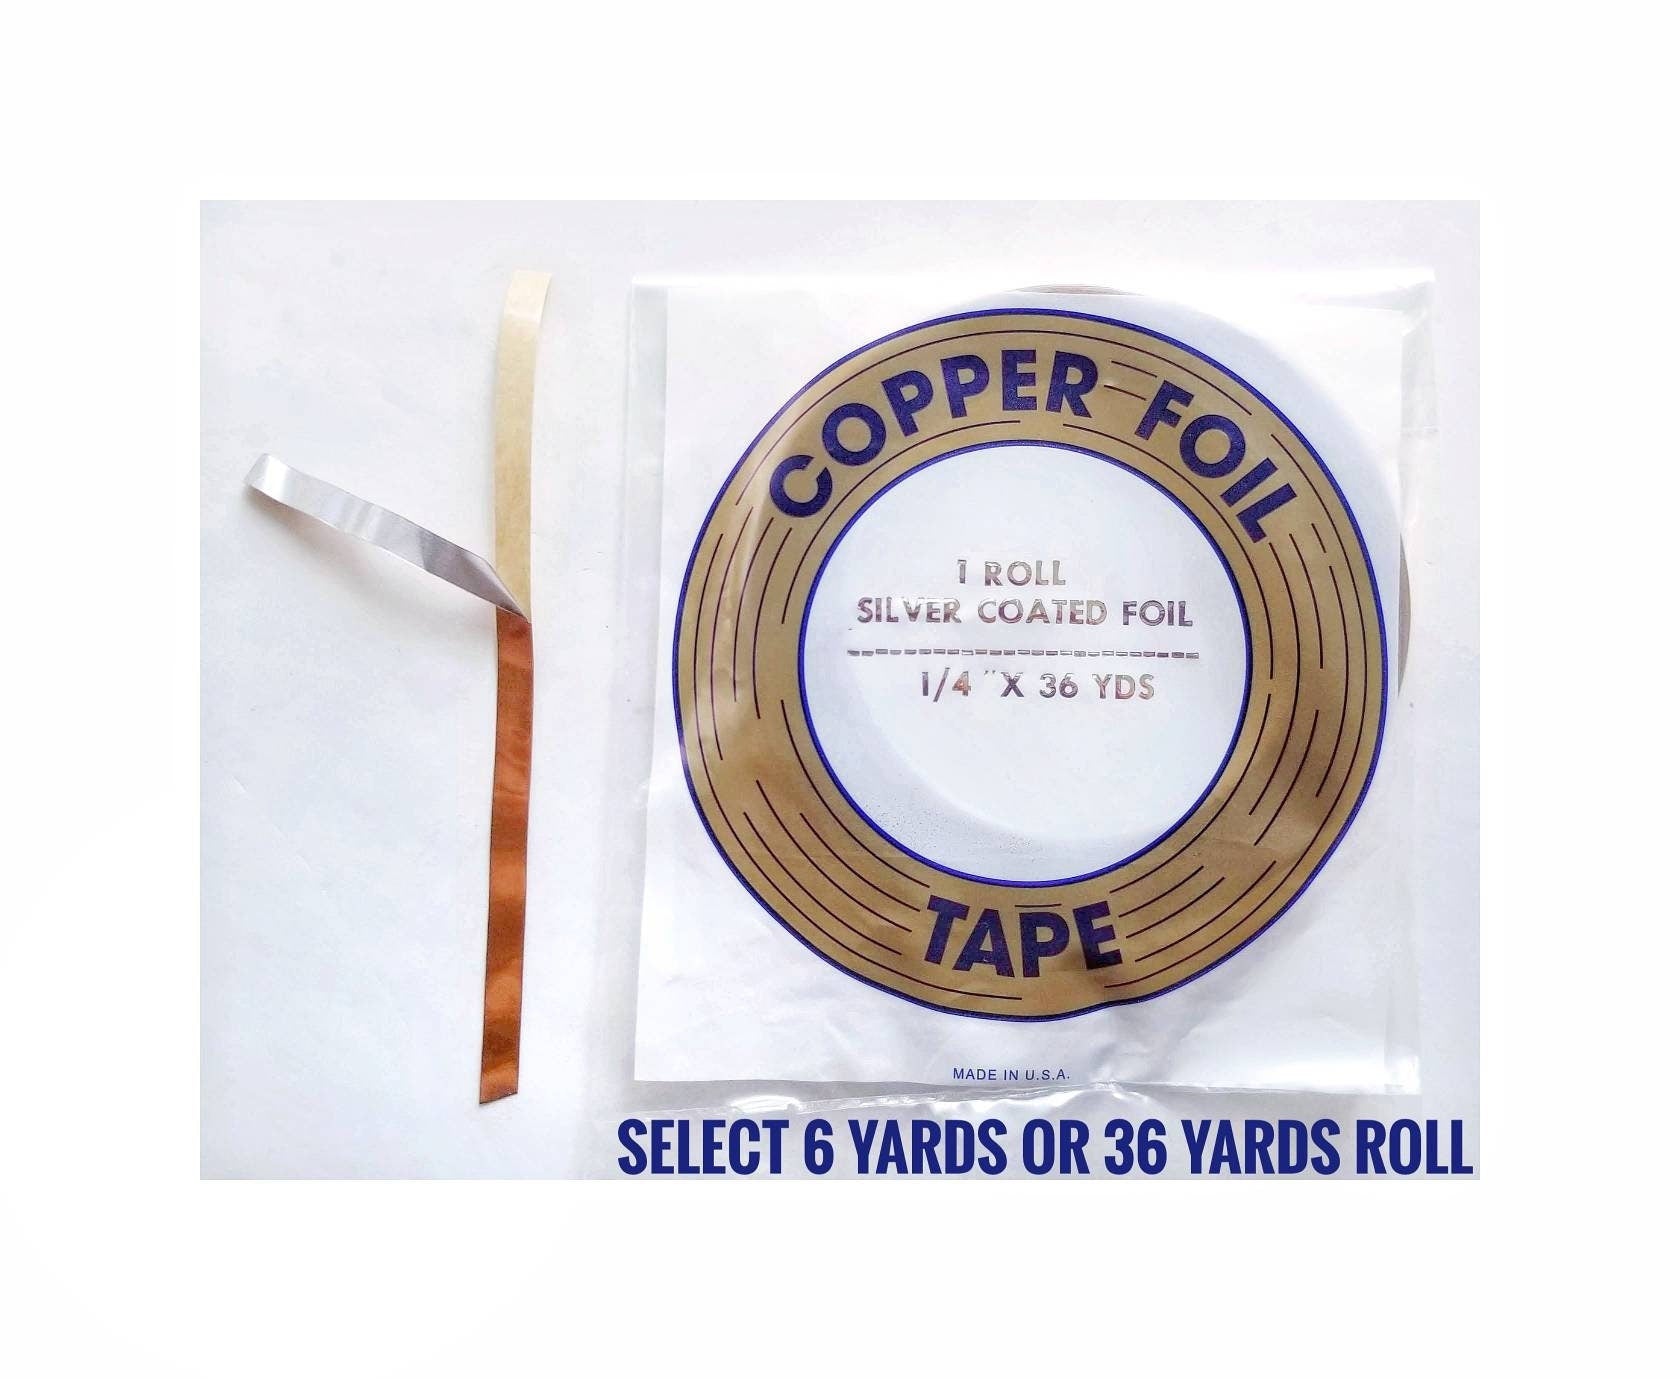 7/32 Black Back Copper Foil Tape